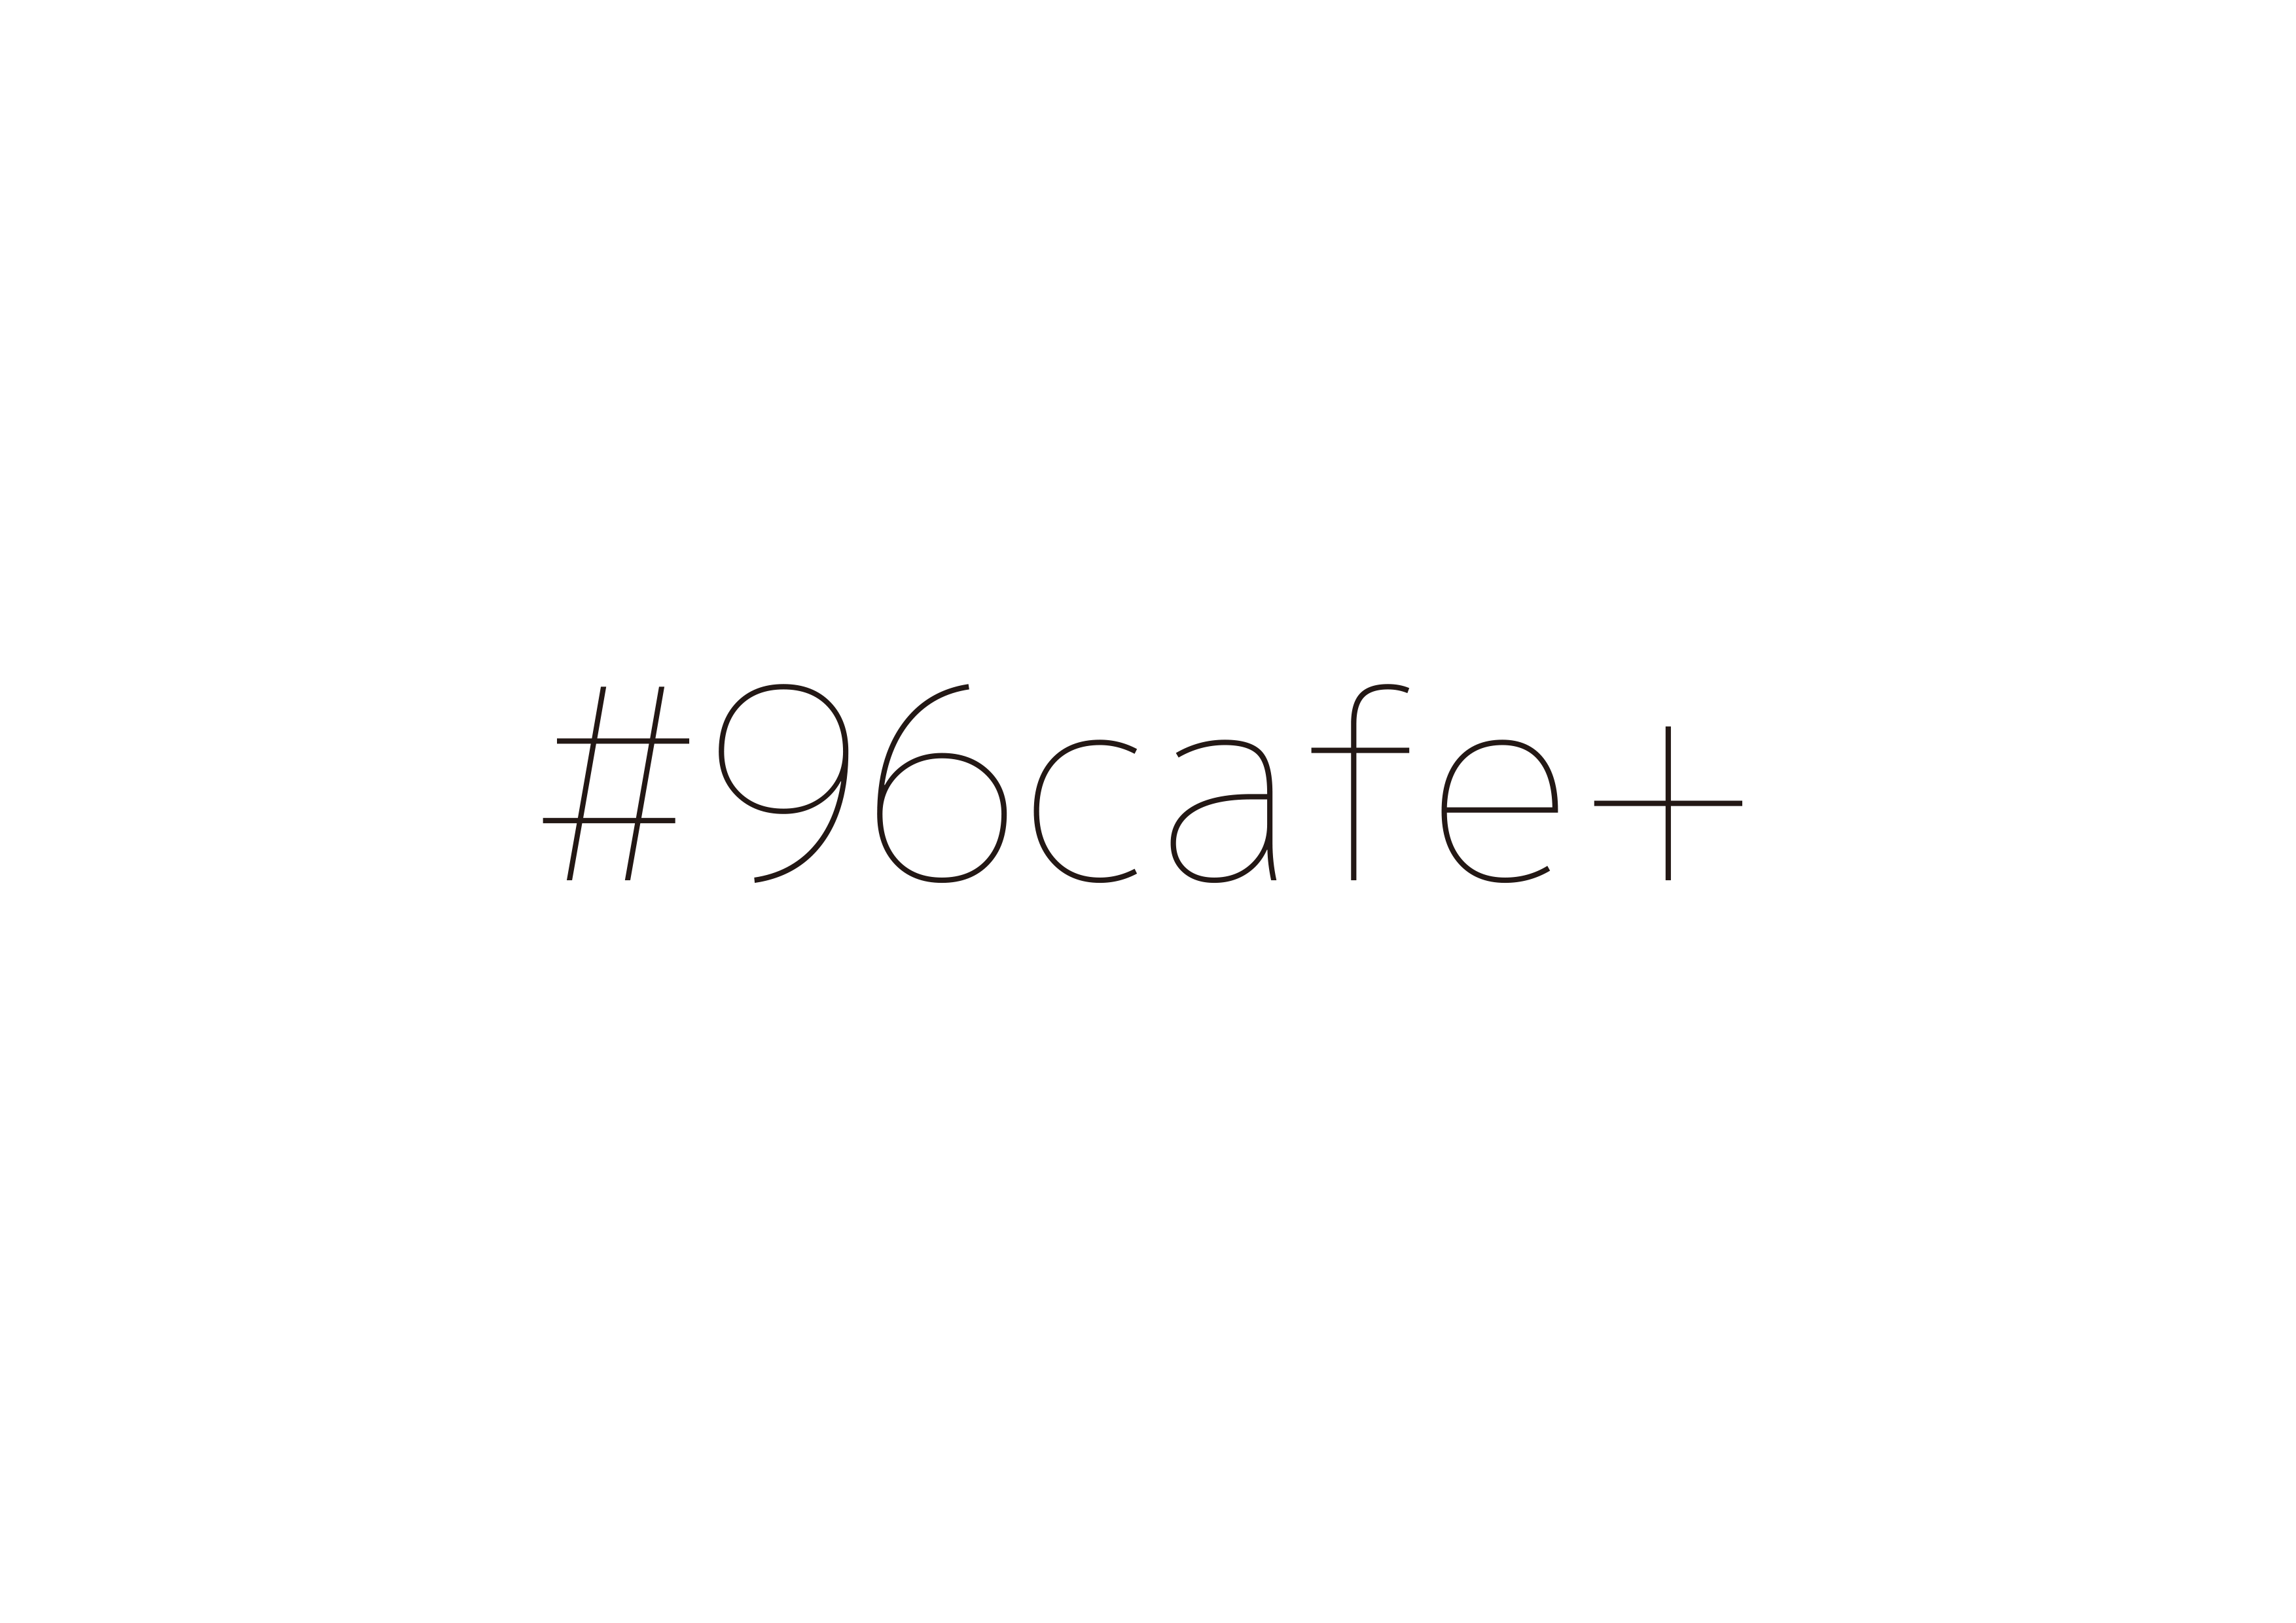 #96cafe+